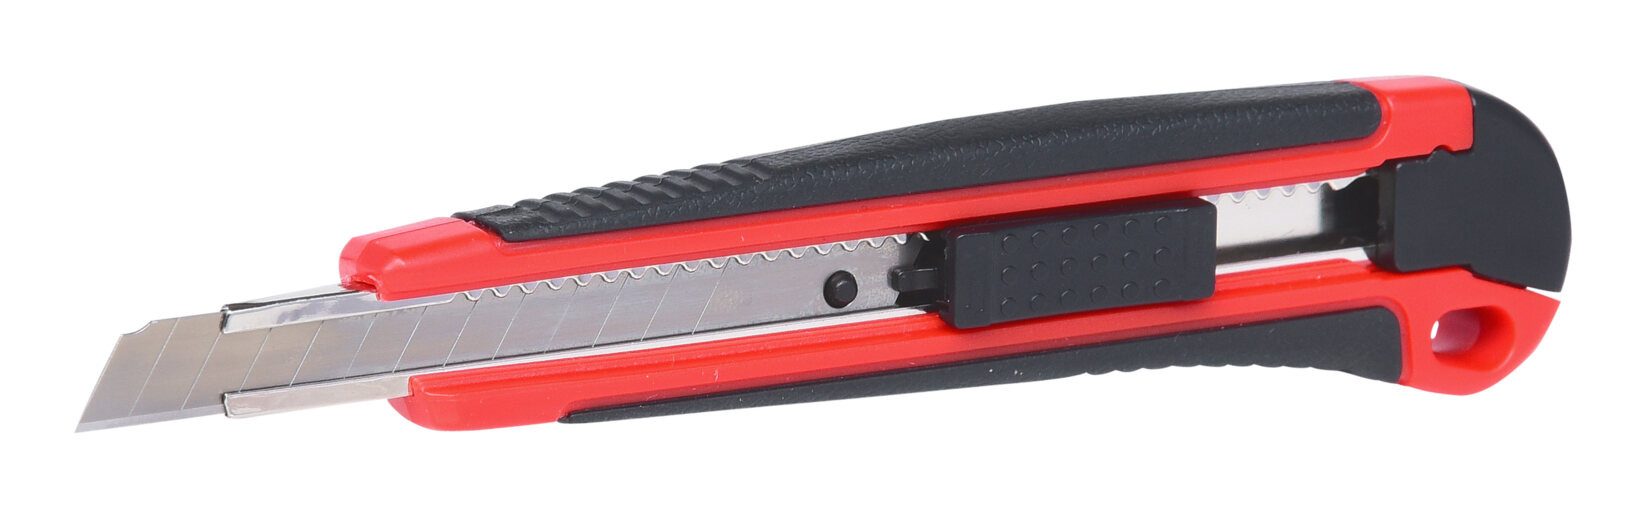 KS Tools Cuttermesser, Klinge: 0.9 cm, Universal-Abbrechklingen, 140 mm, Klinge 9 x 80 mm